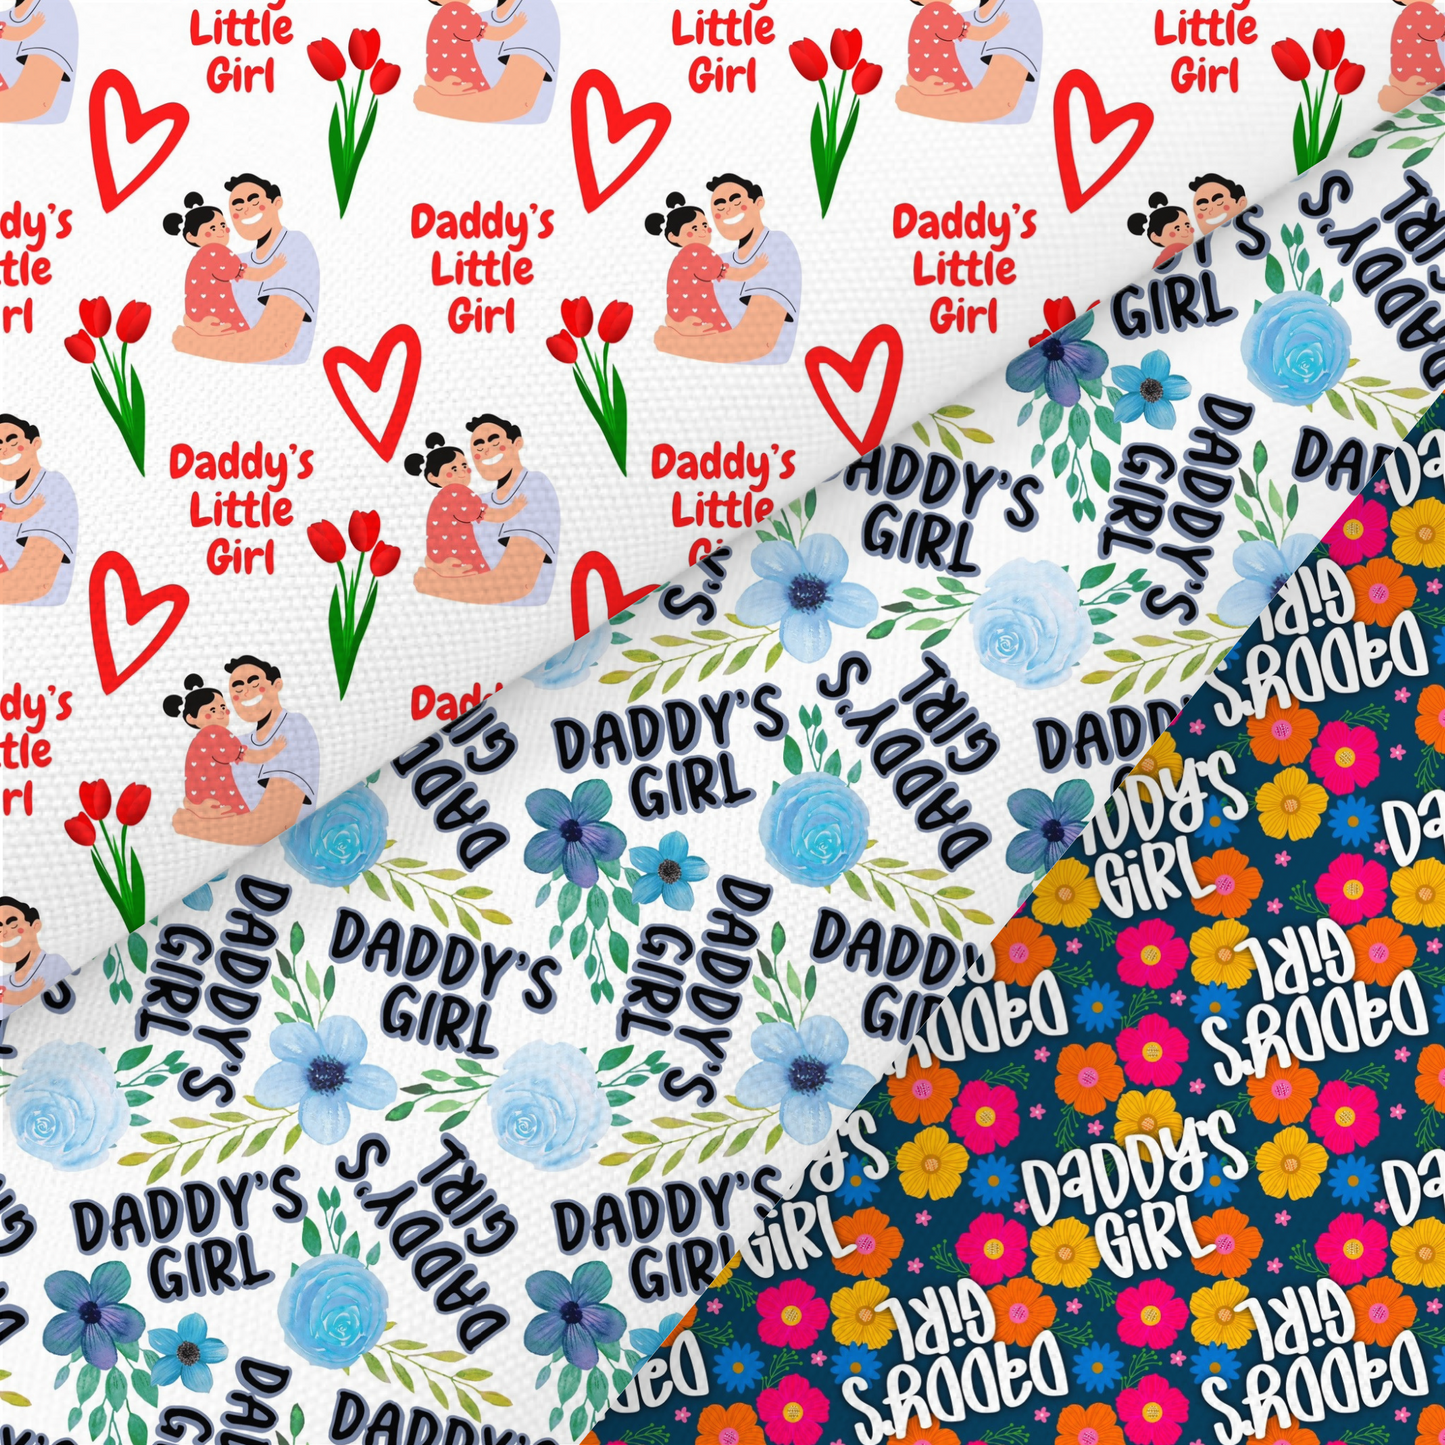 Daddy’s Girl Printed Fabric